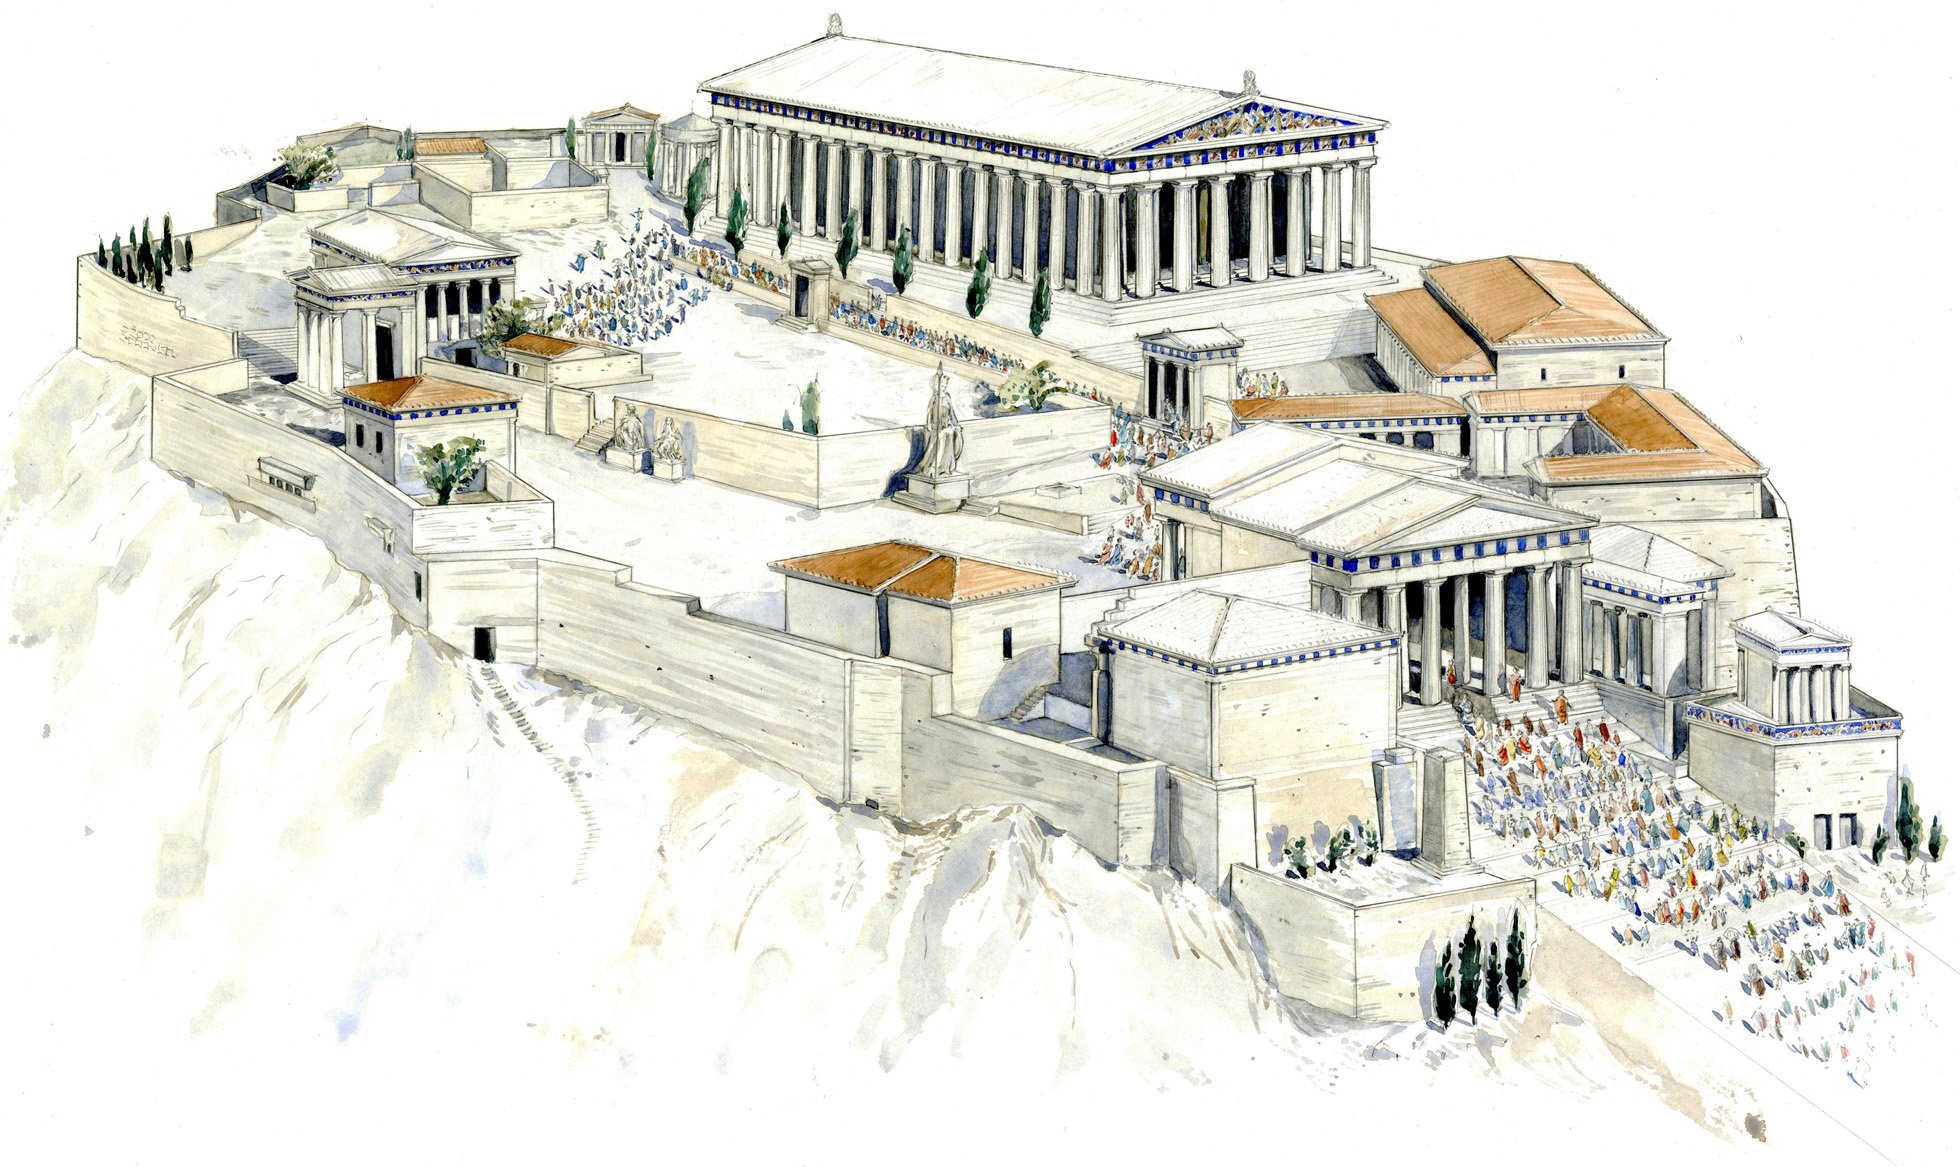 Parthenon Sketch at Explore collection of